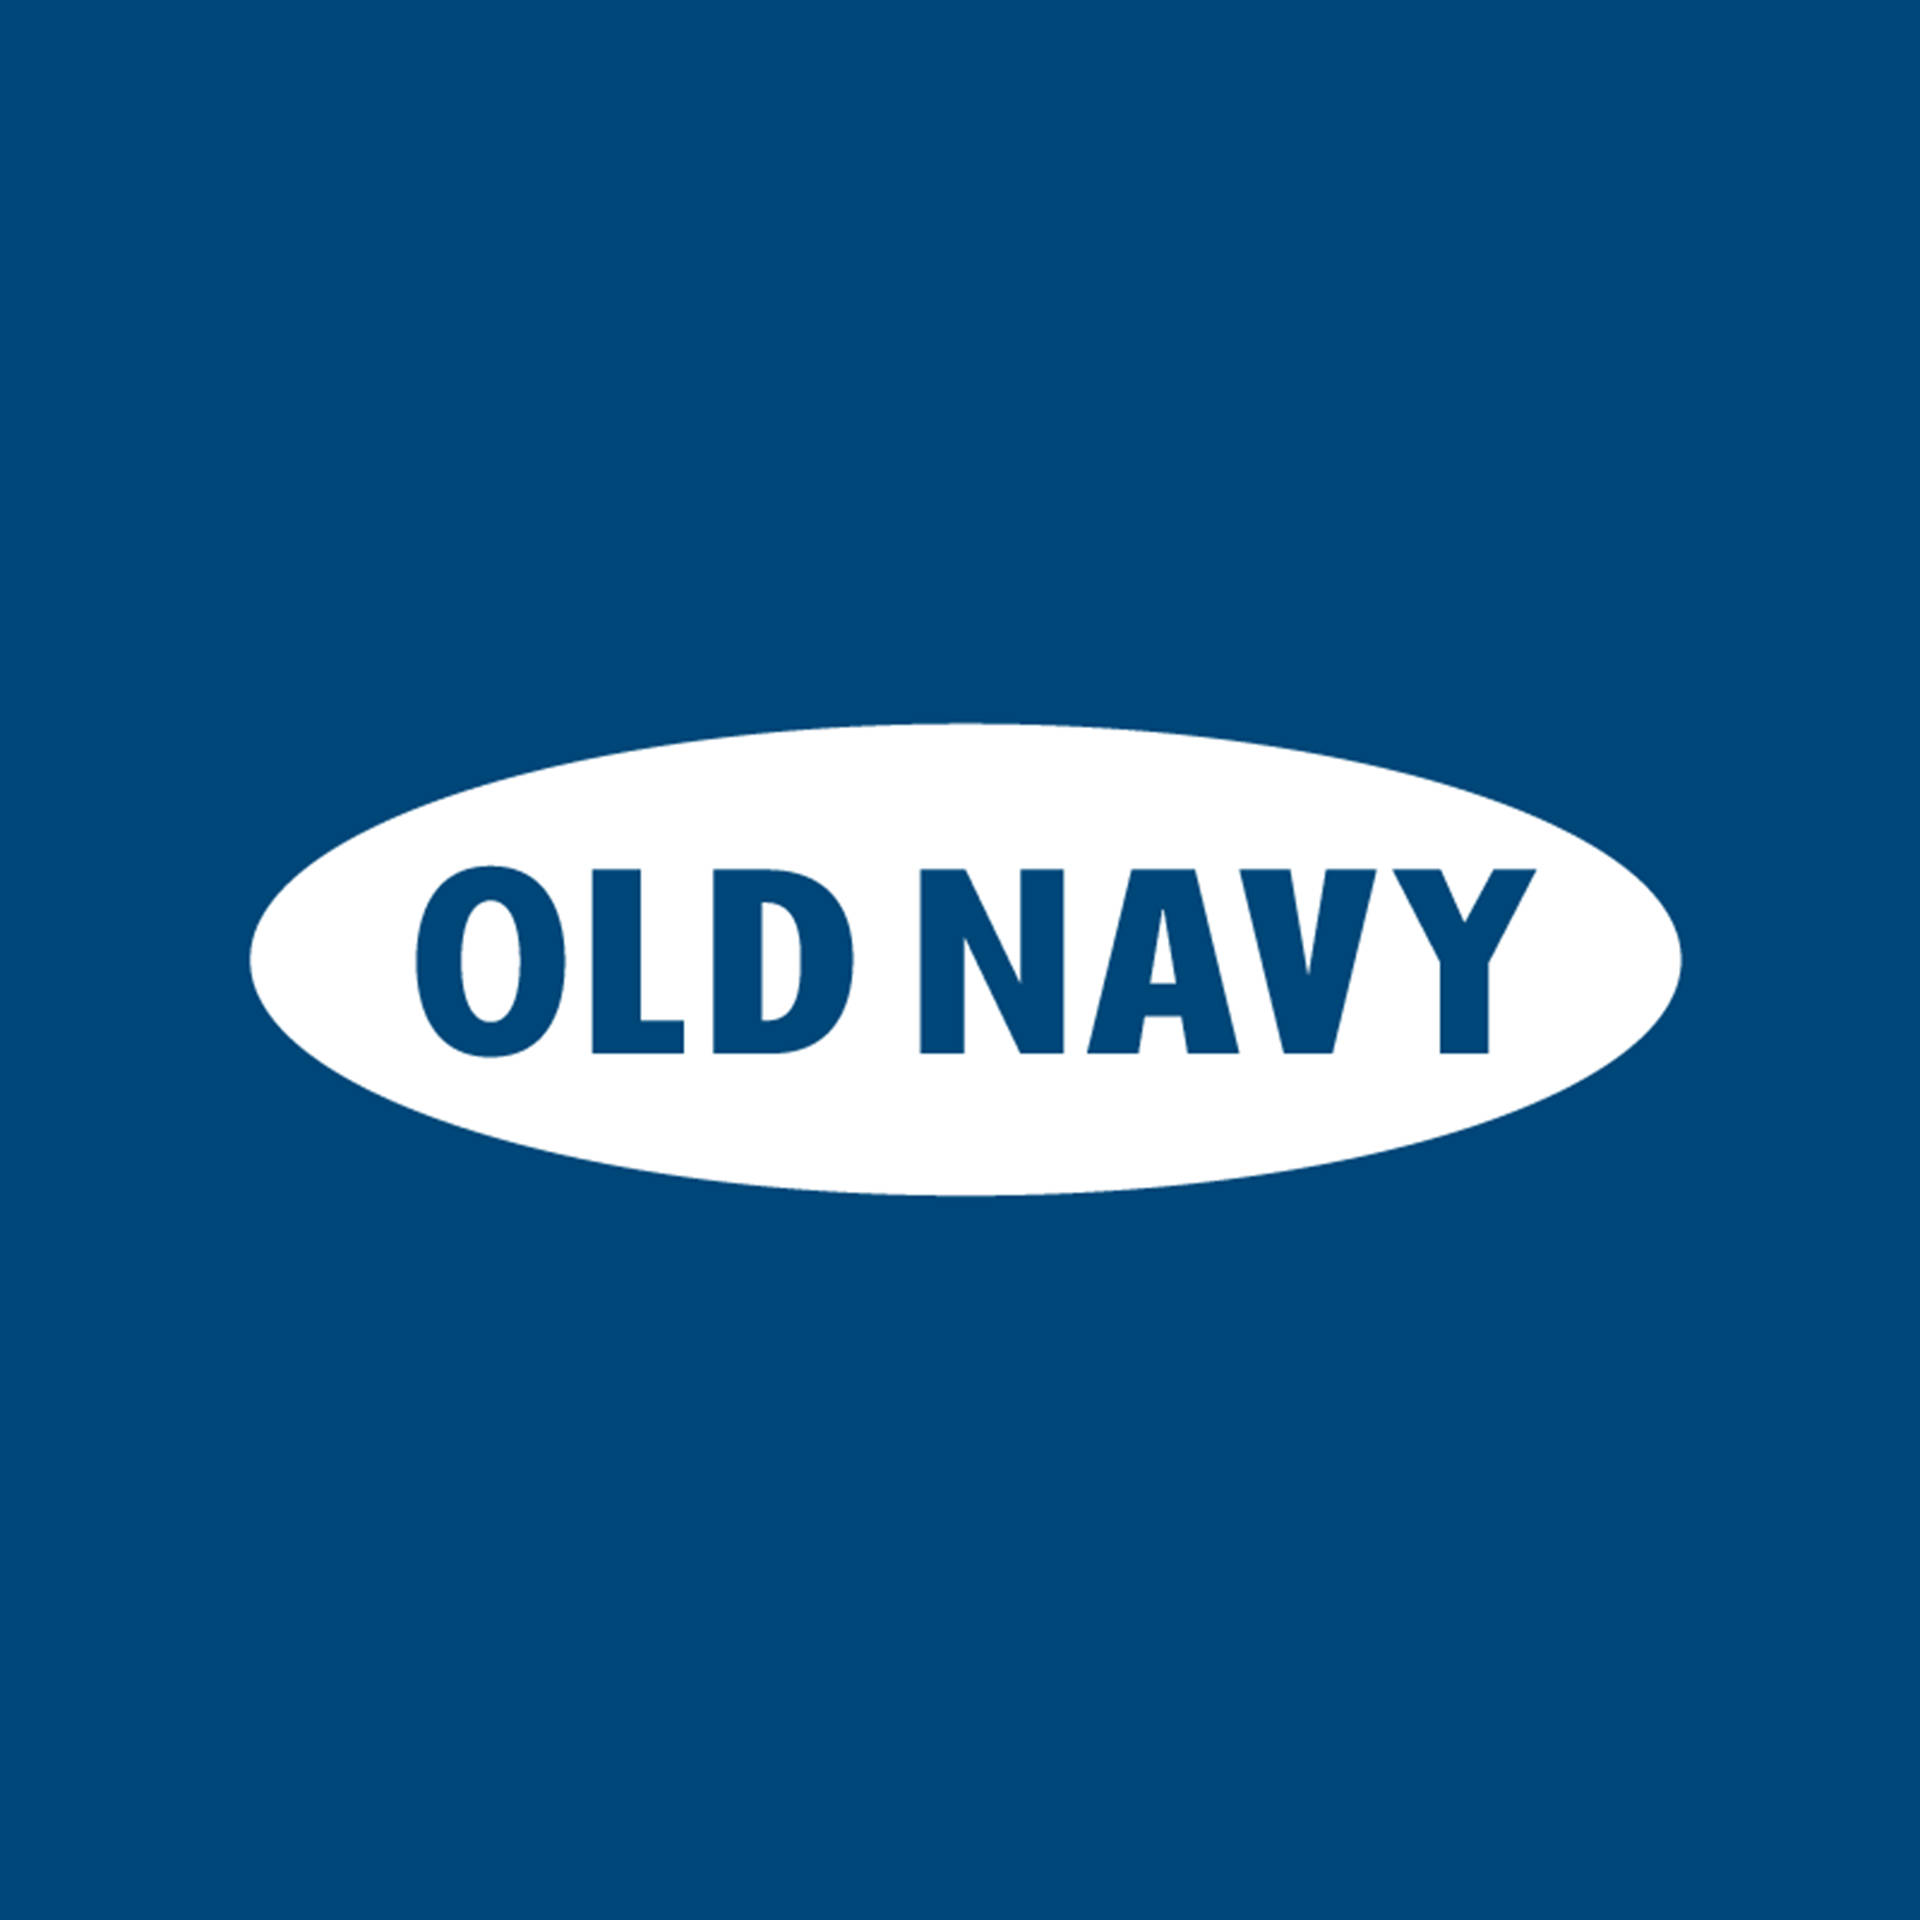 Old Navy Blue Circular Logo Background